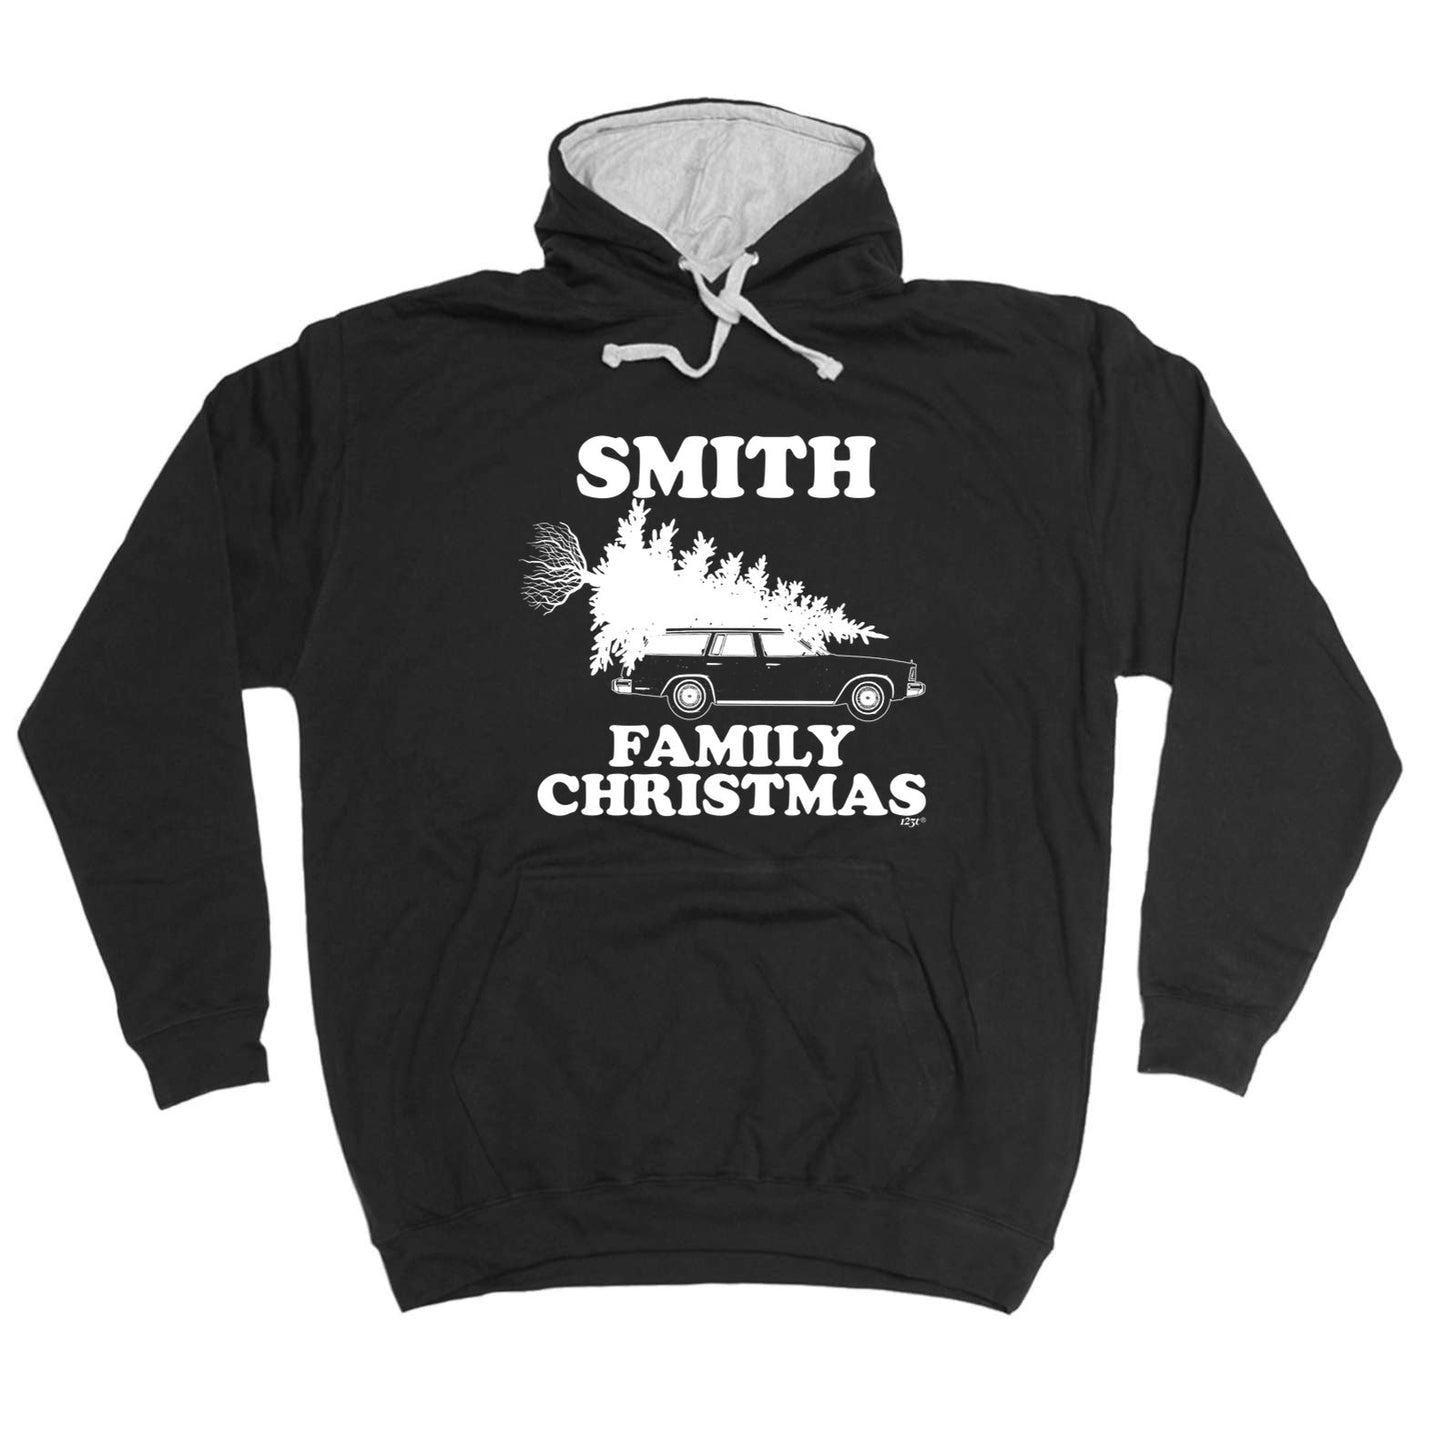 Family Christmas Smith - Xmas Novelty Hoodies Hoodie